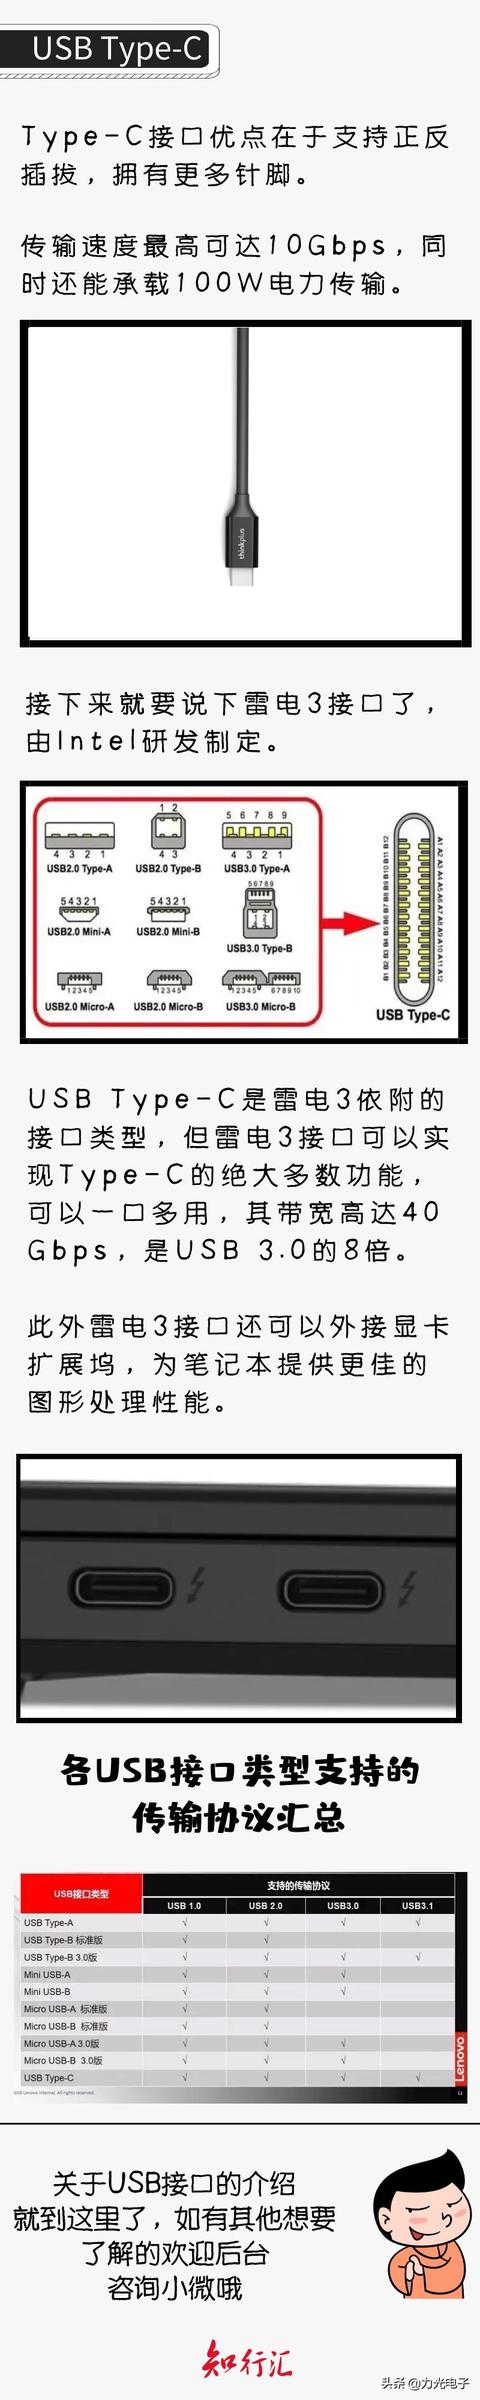 usb接口是一種非常常用的接口方式（你熟悉又陌生的USB接口全解析）5